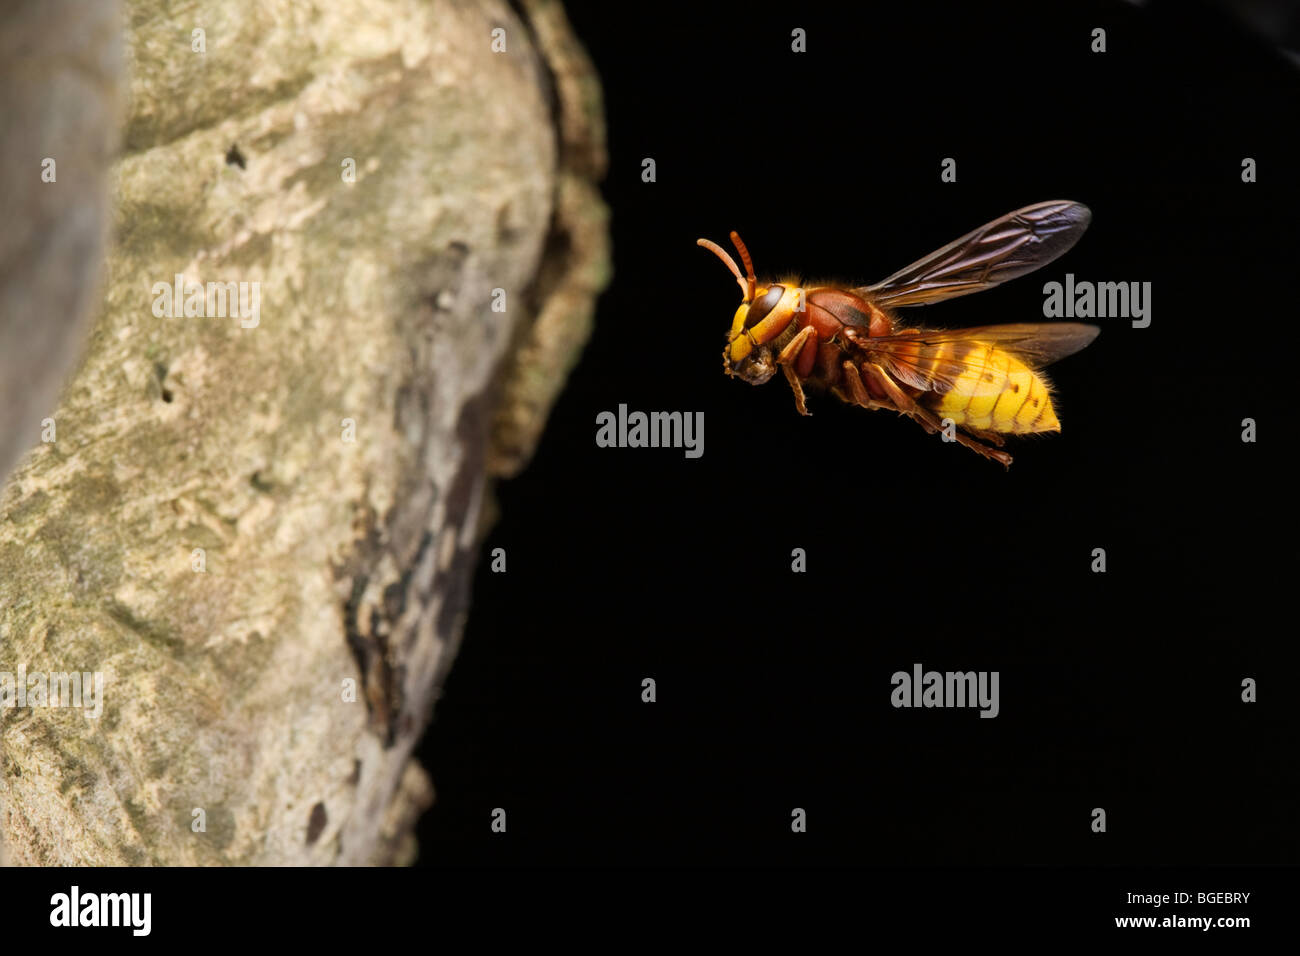 Hornet returning to its nest. Stock Photo